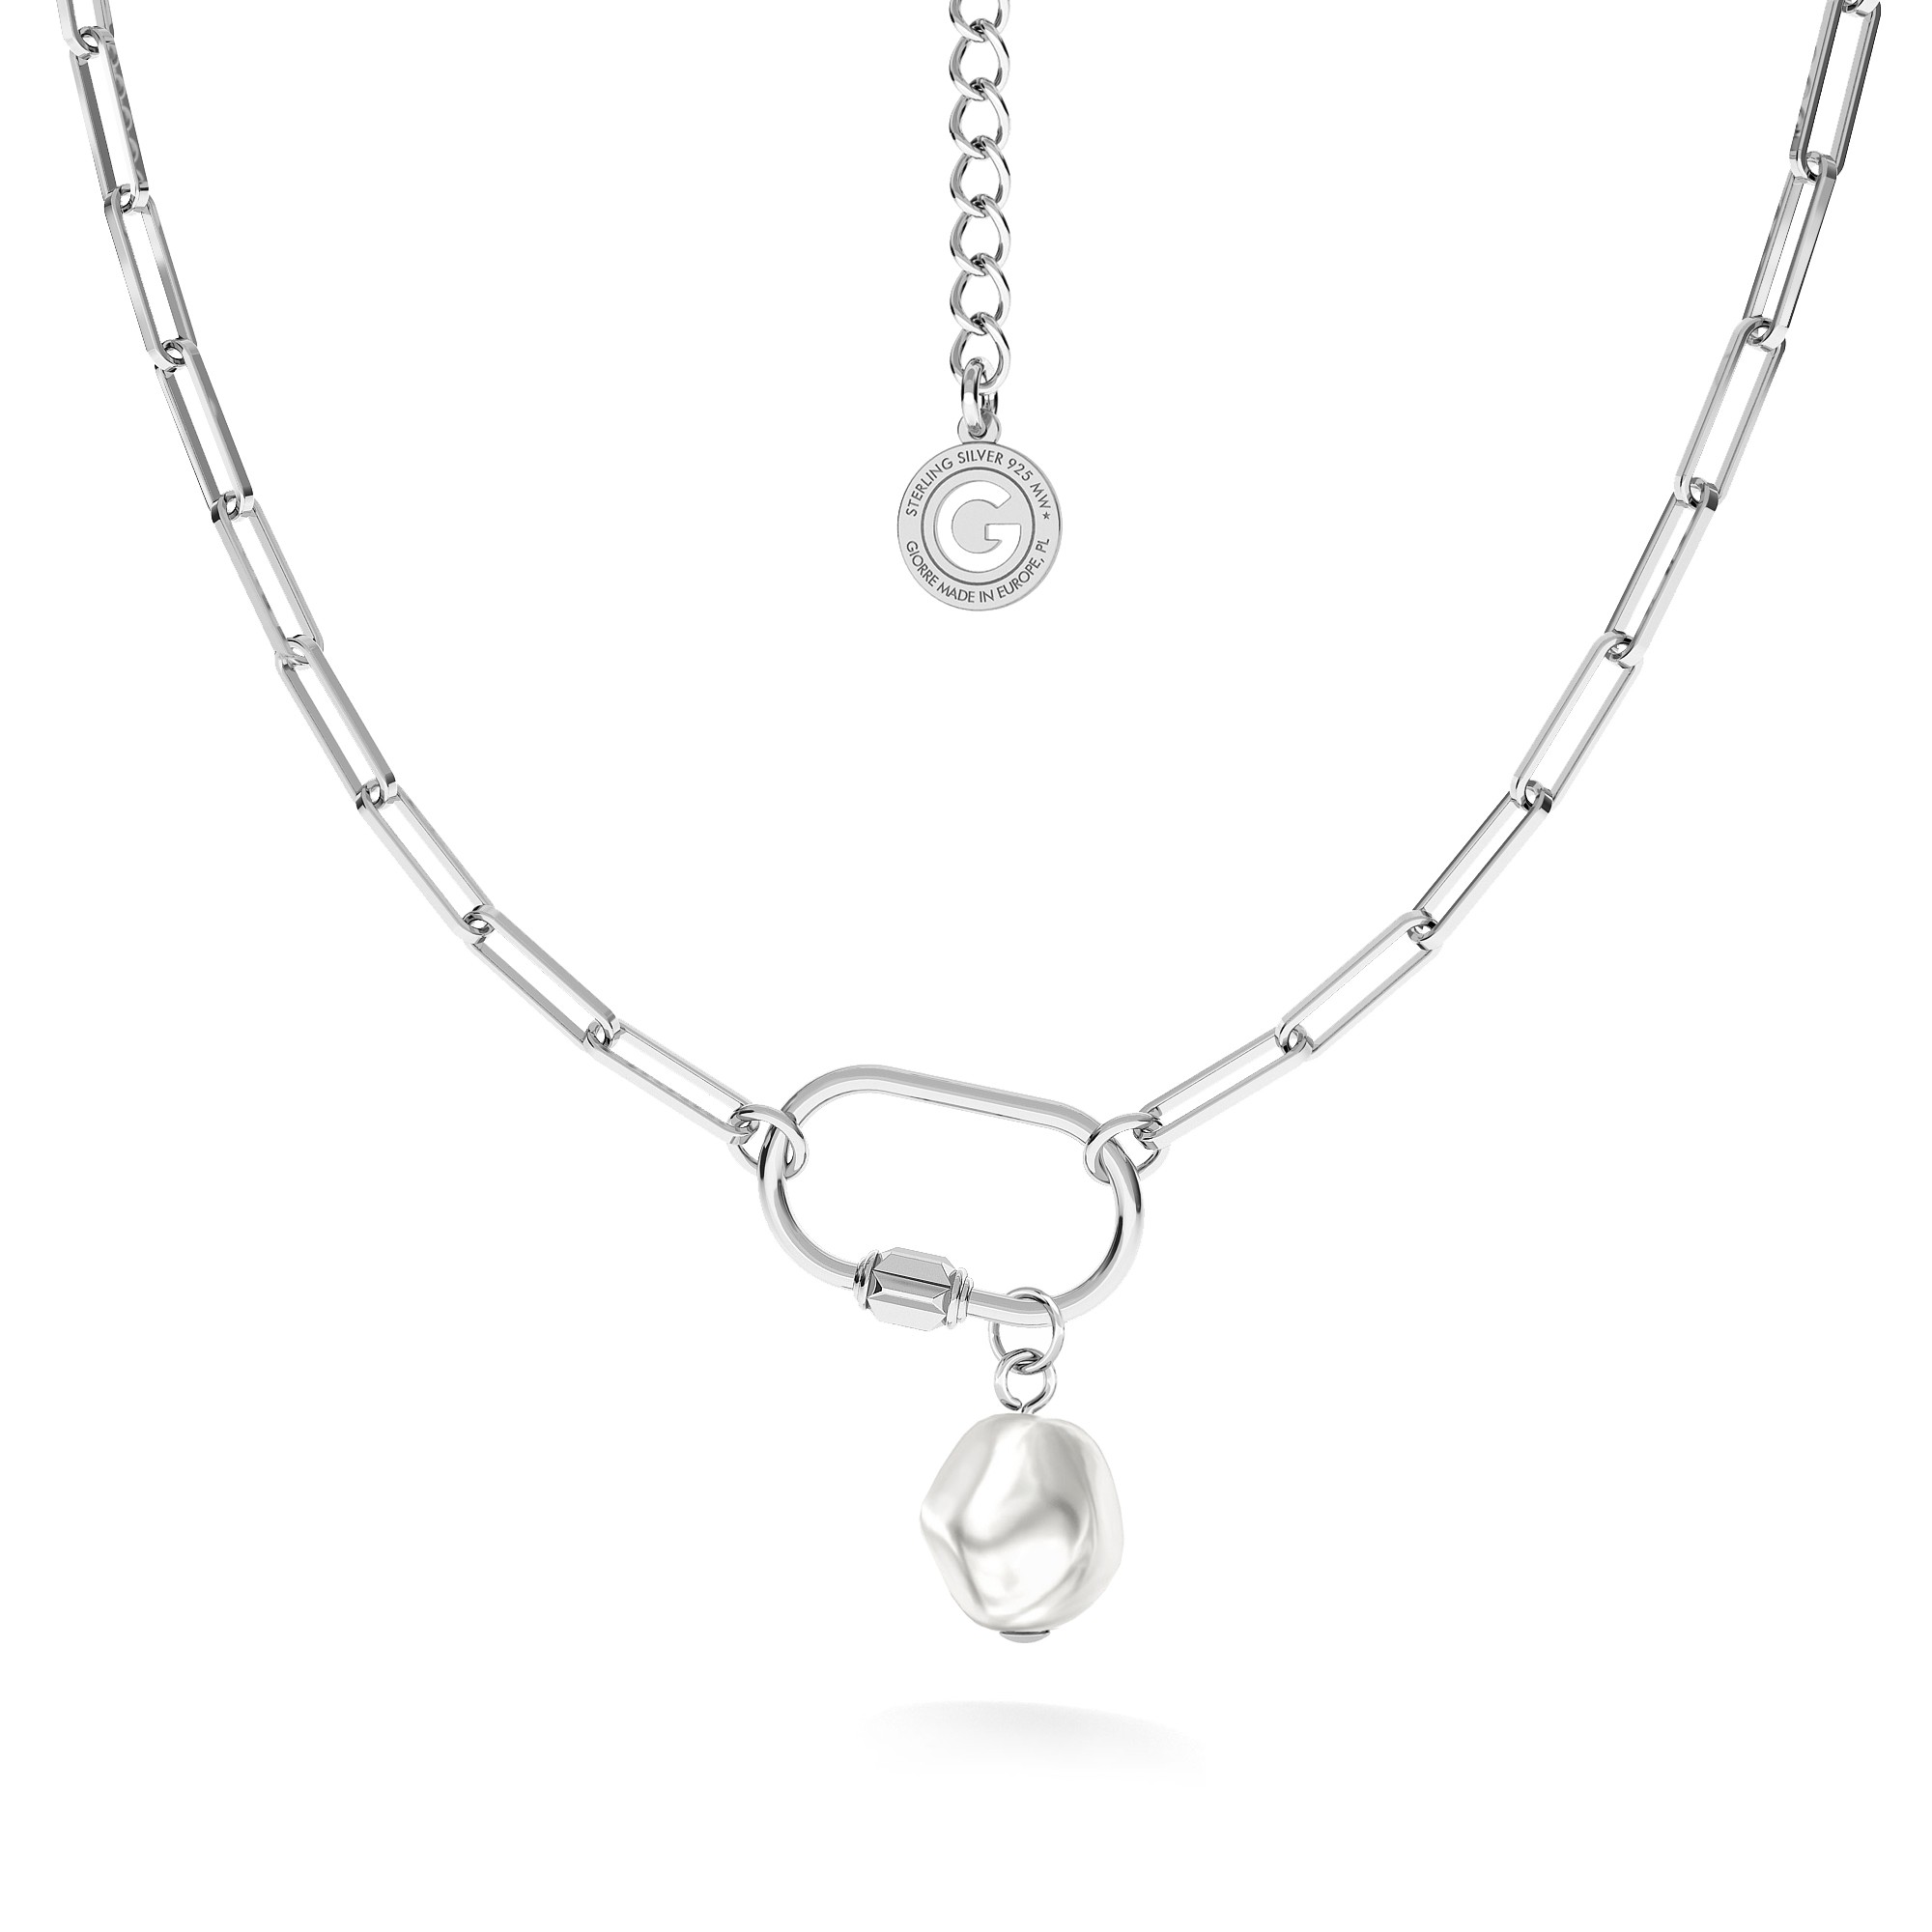 Monstera leaf necklace sterling silver 925